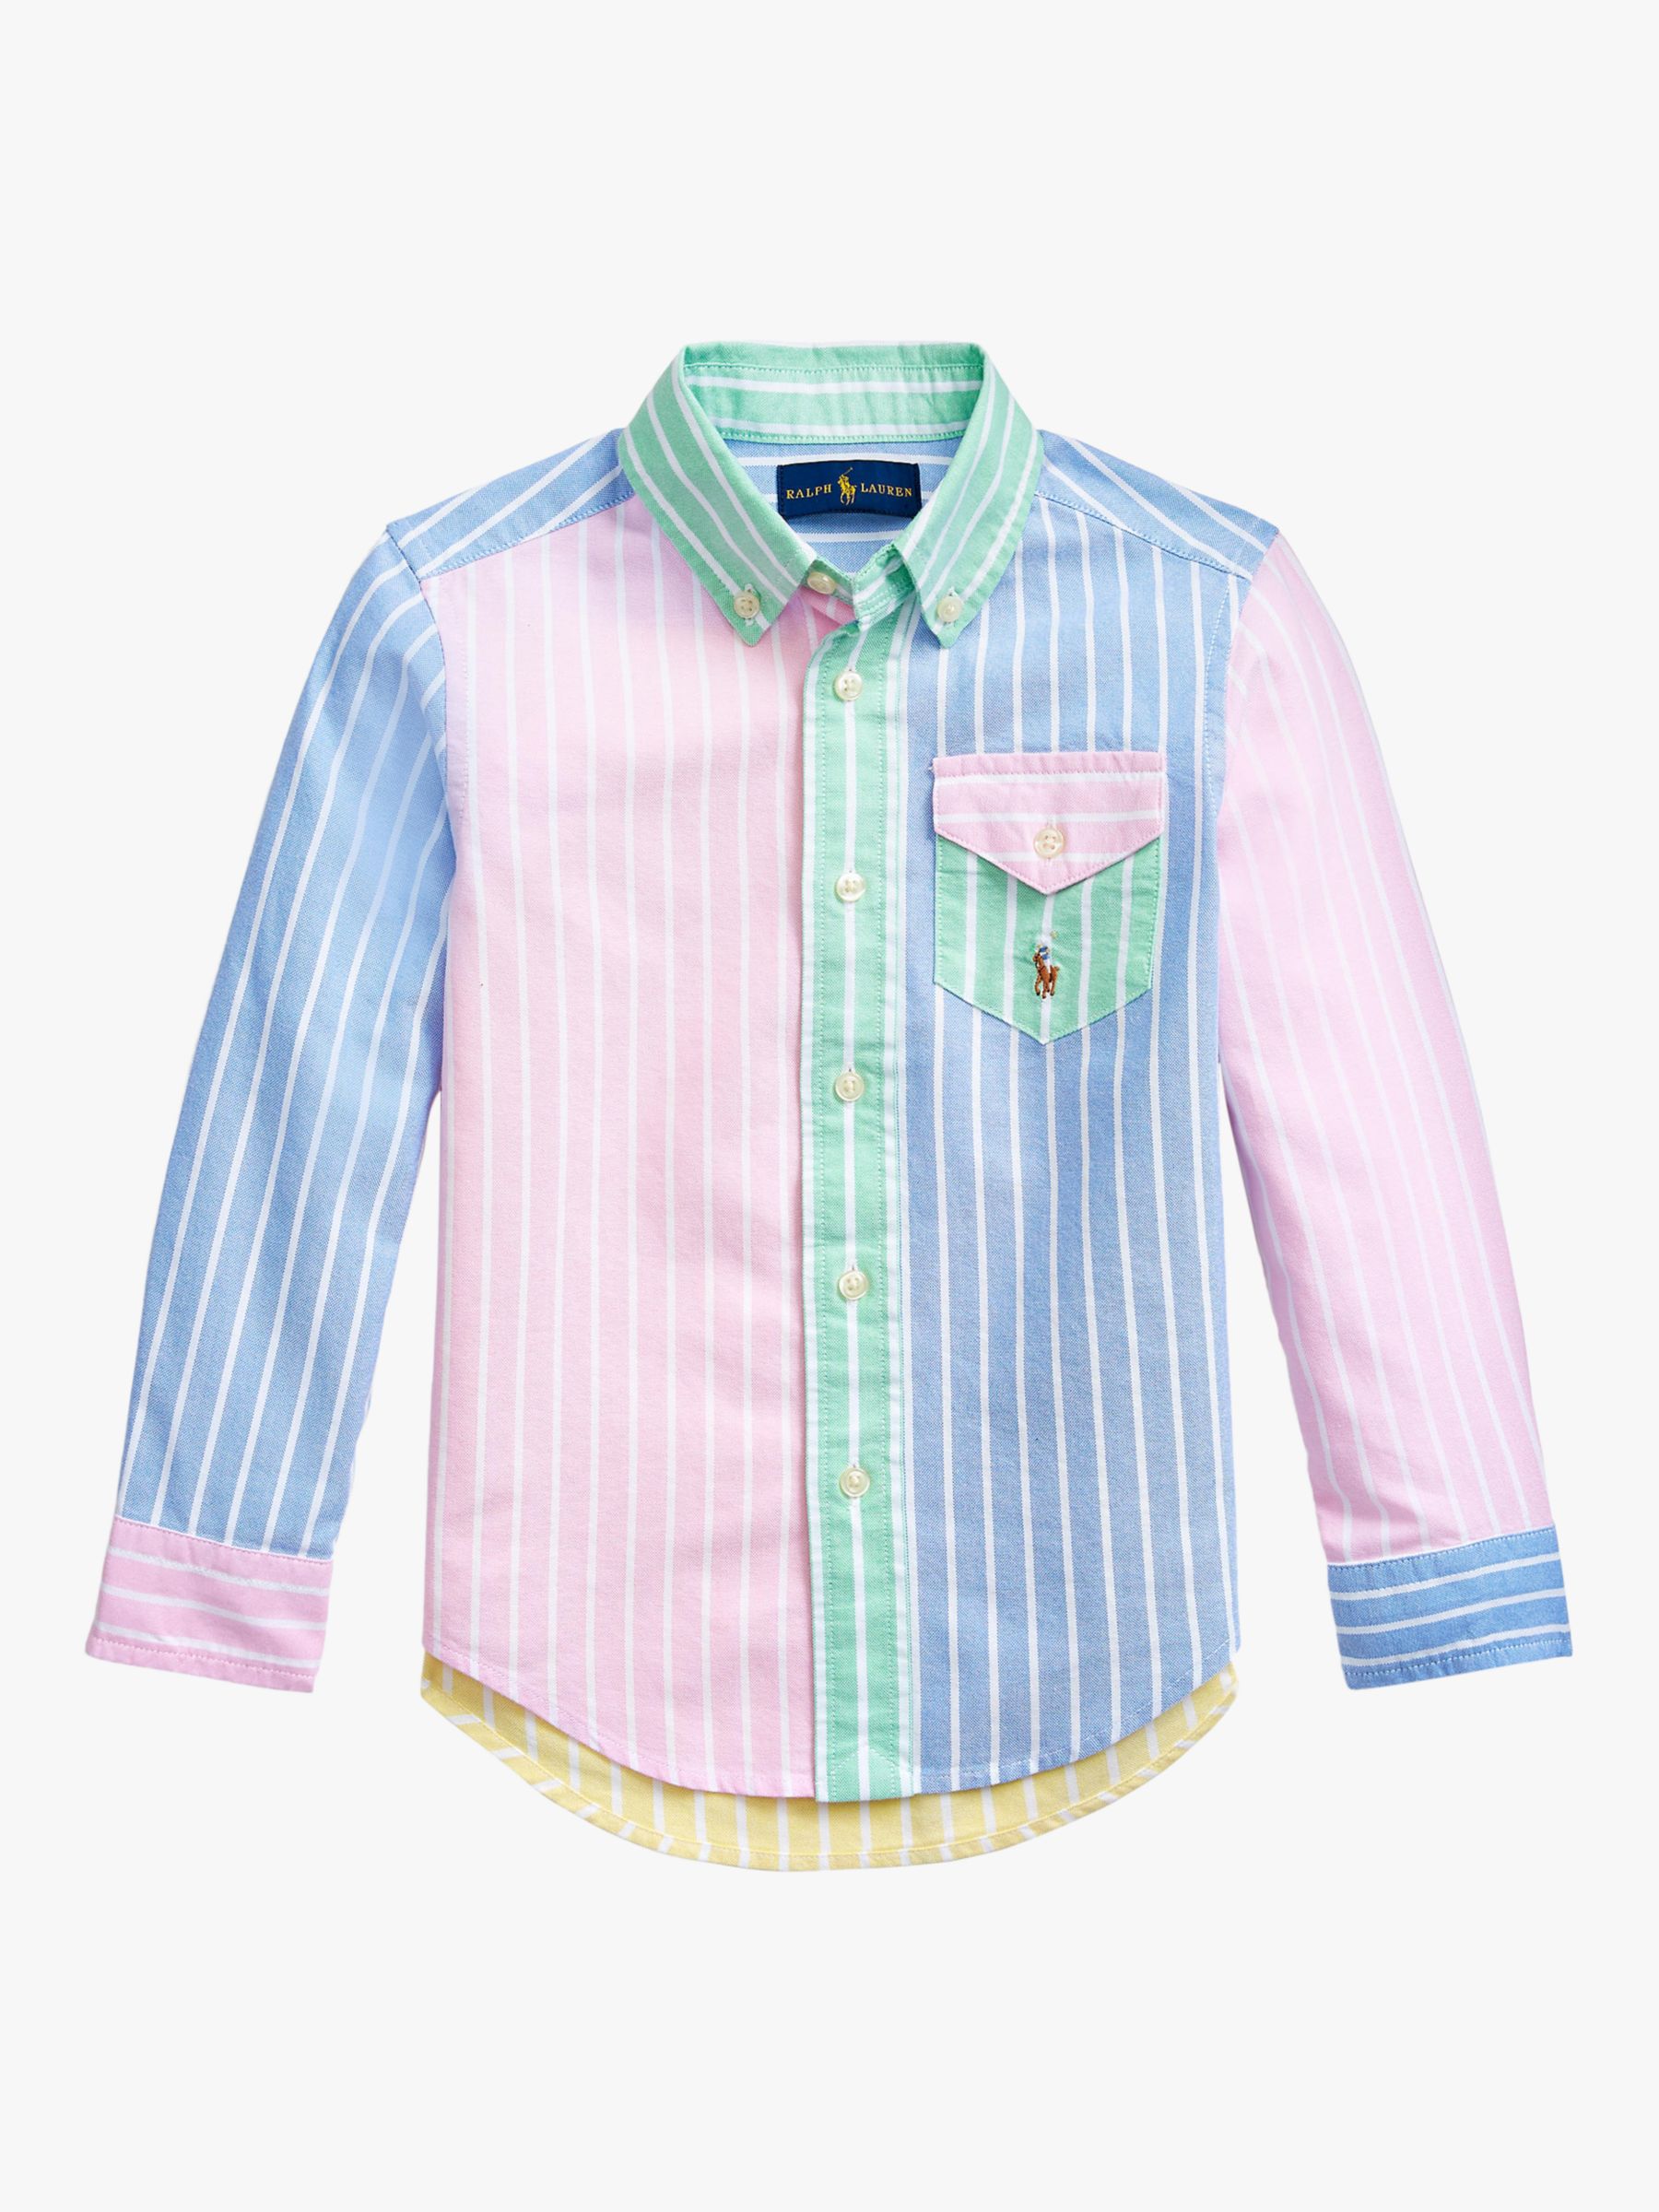 Polo Ralph Lauren Kids' Fun Shirt, Multi Stripe